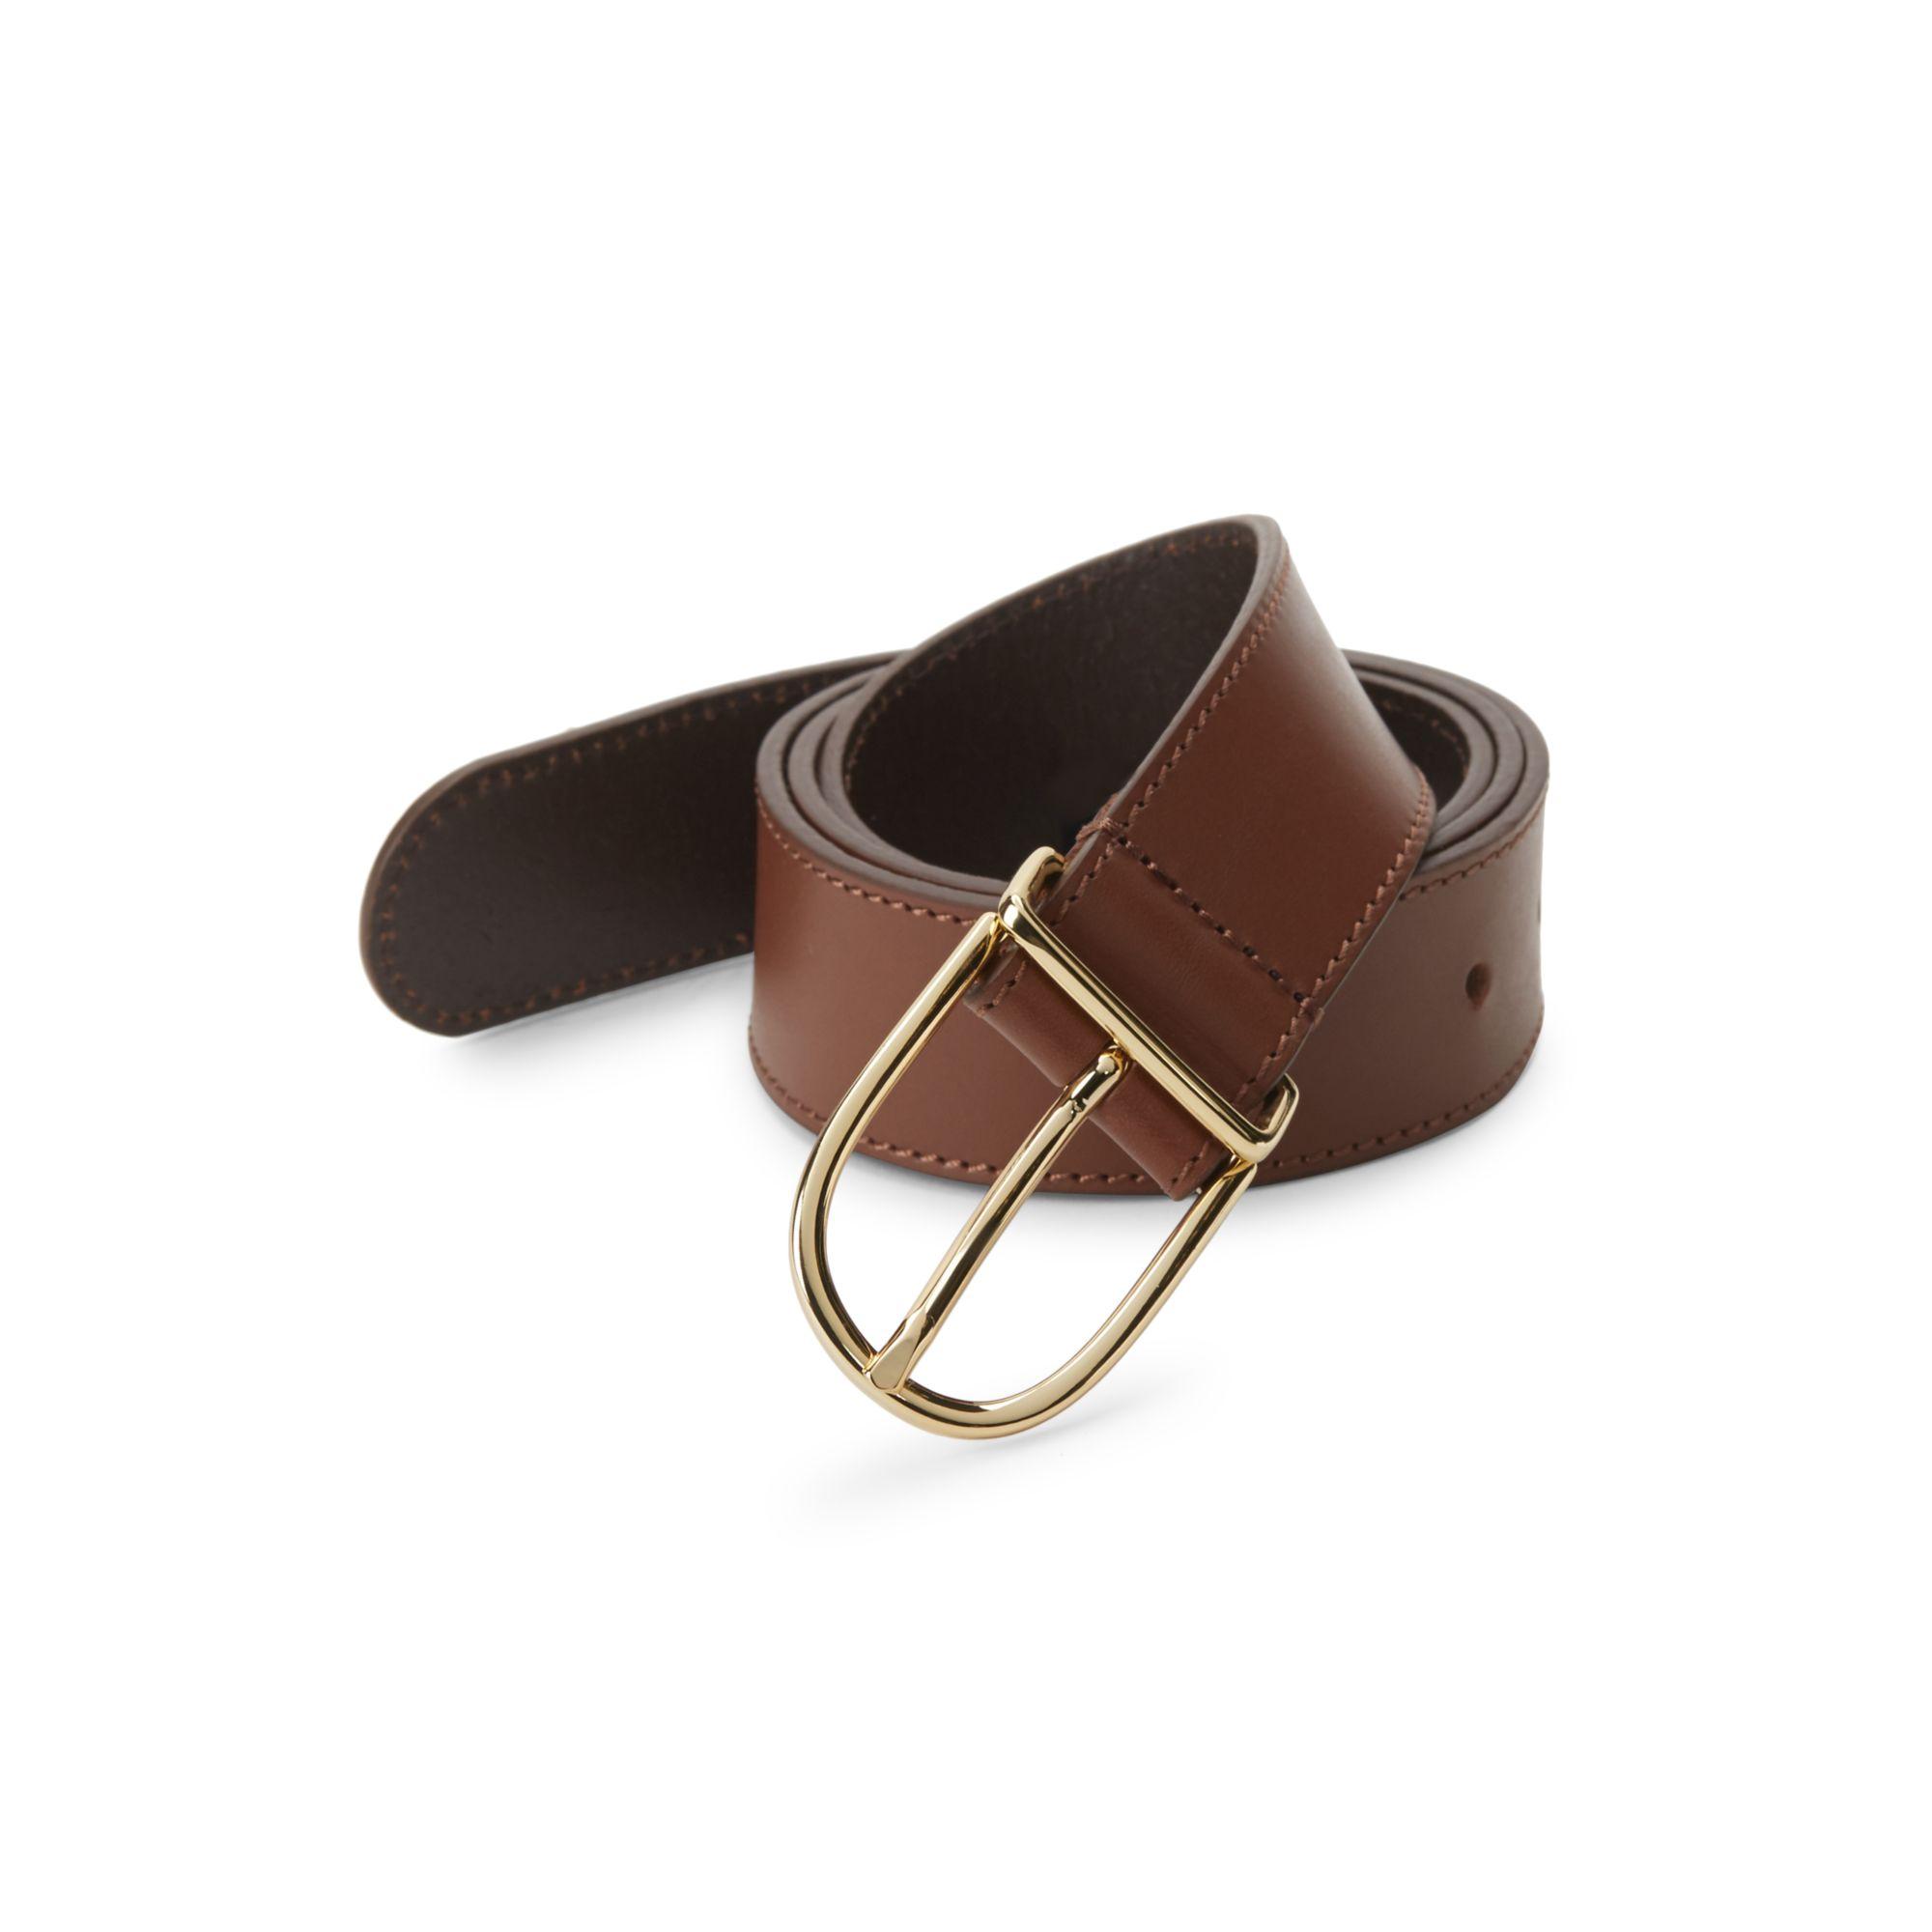 Saks Fifth Avenue Slim Leather Belt in Cognac (Brown) for Men - Lyst